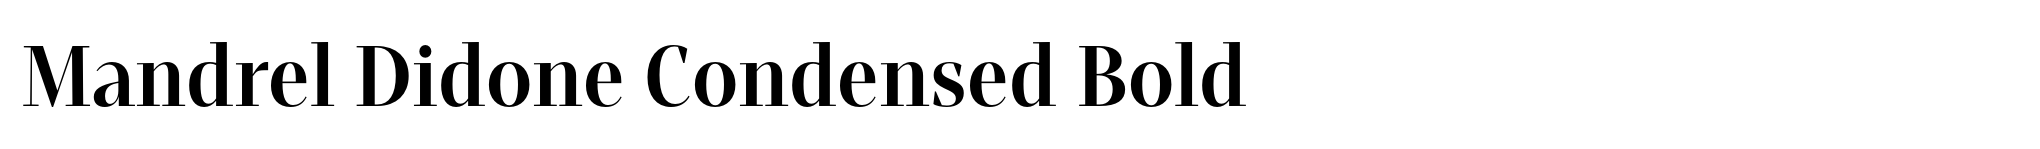 Mandrel Didone Condensed Bold image